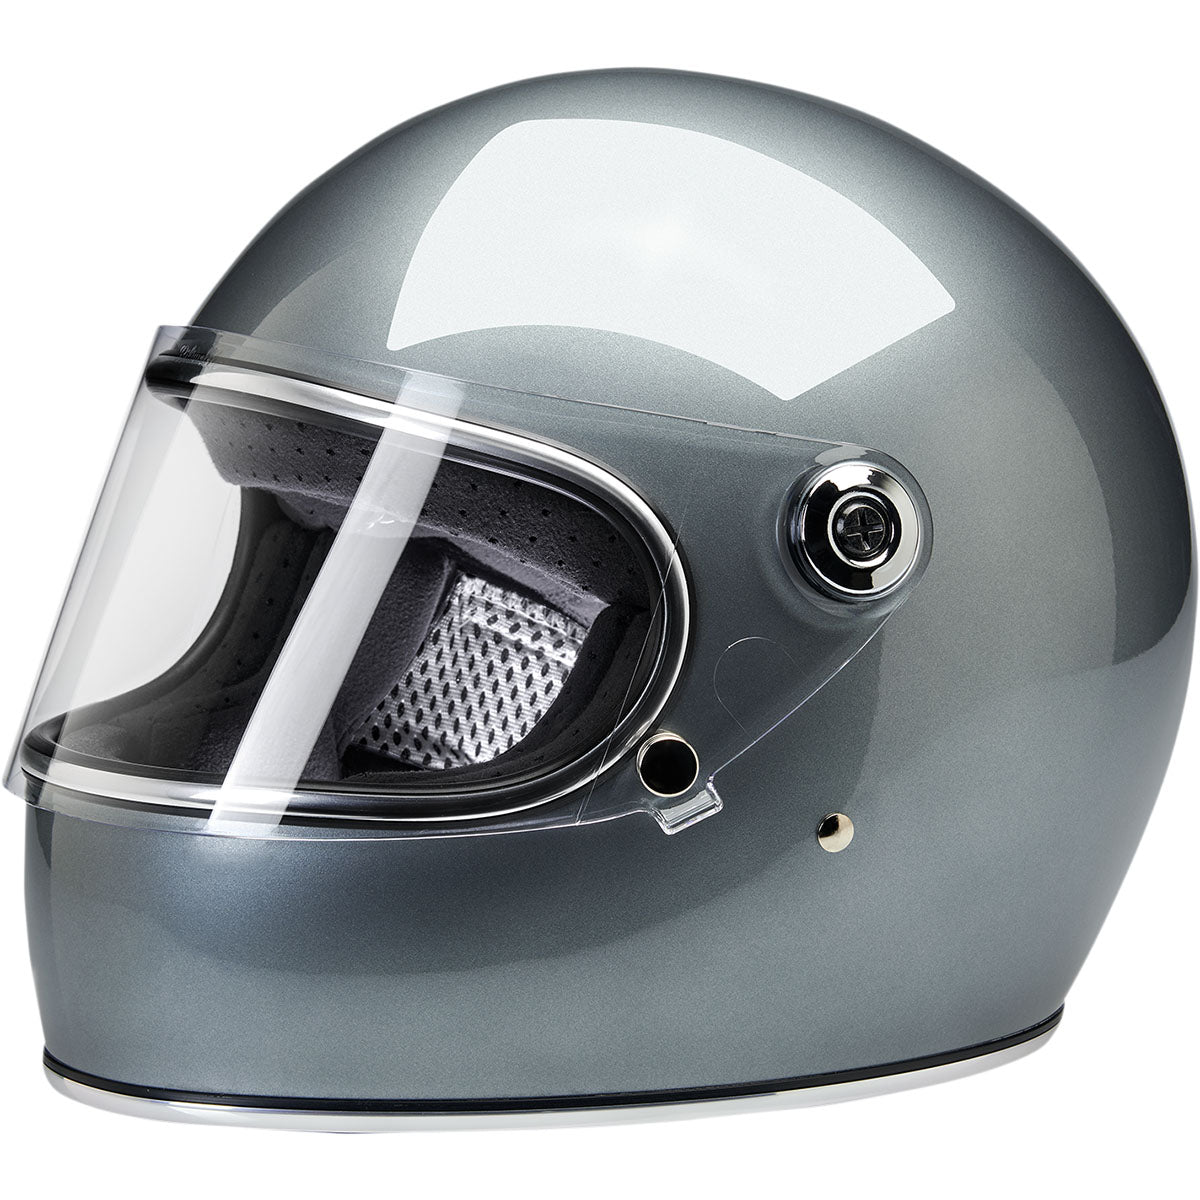 Biltwell Gringo S Helmet CLOSEOUT - Metallic Sterling